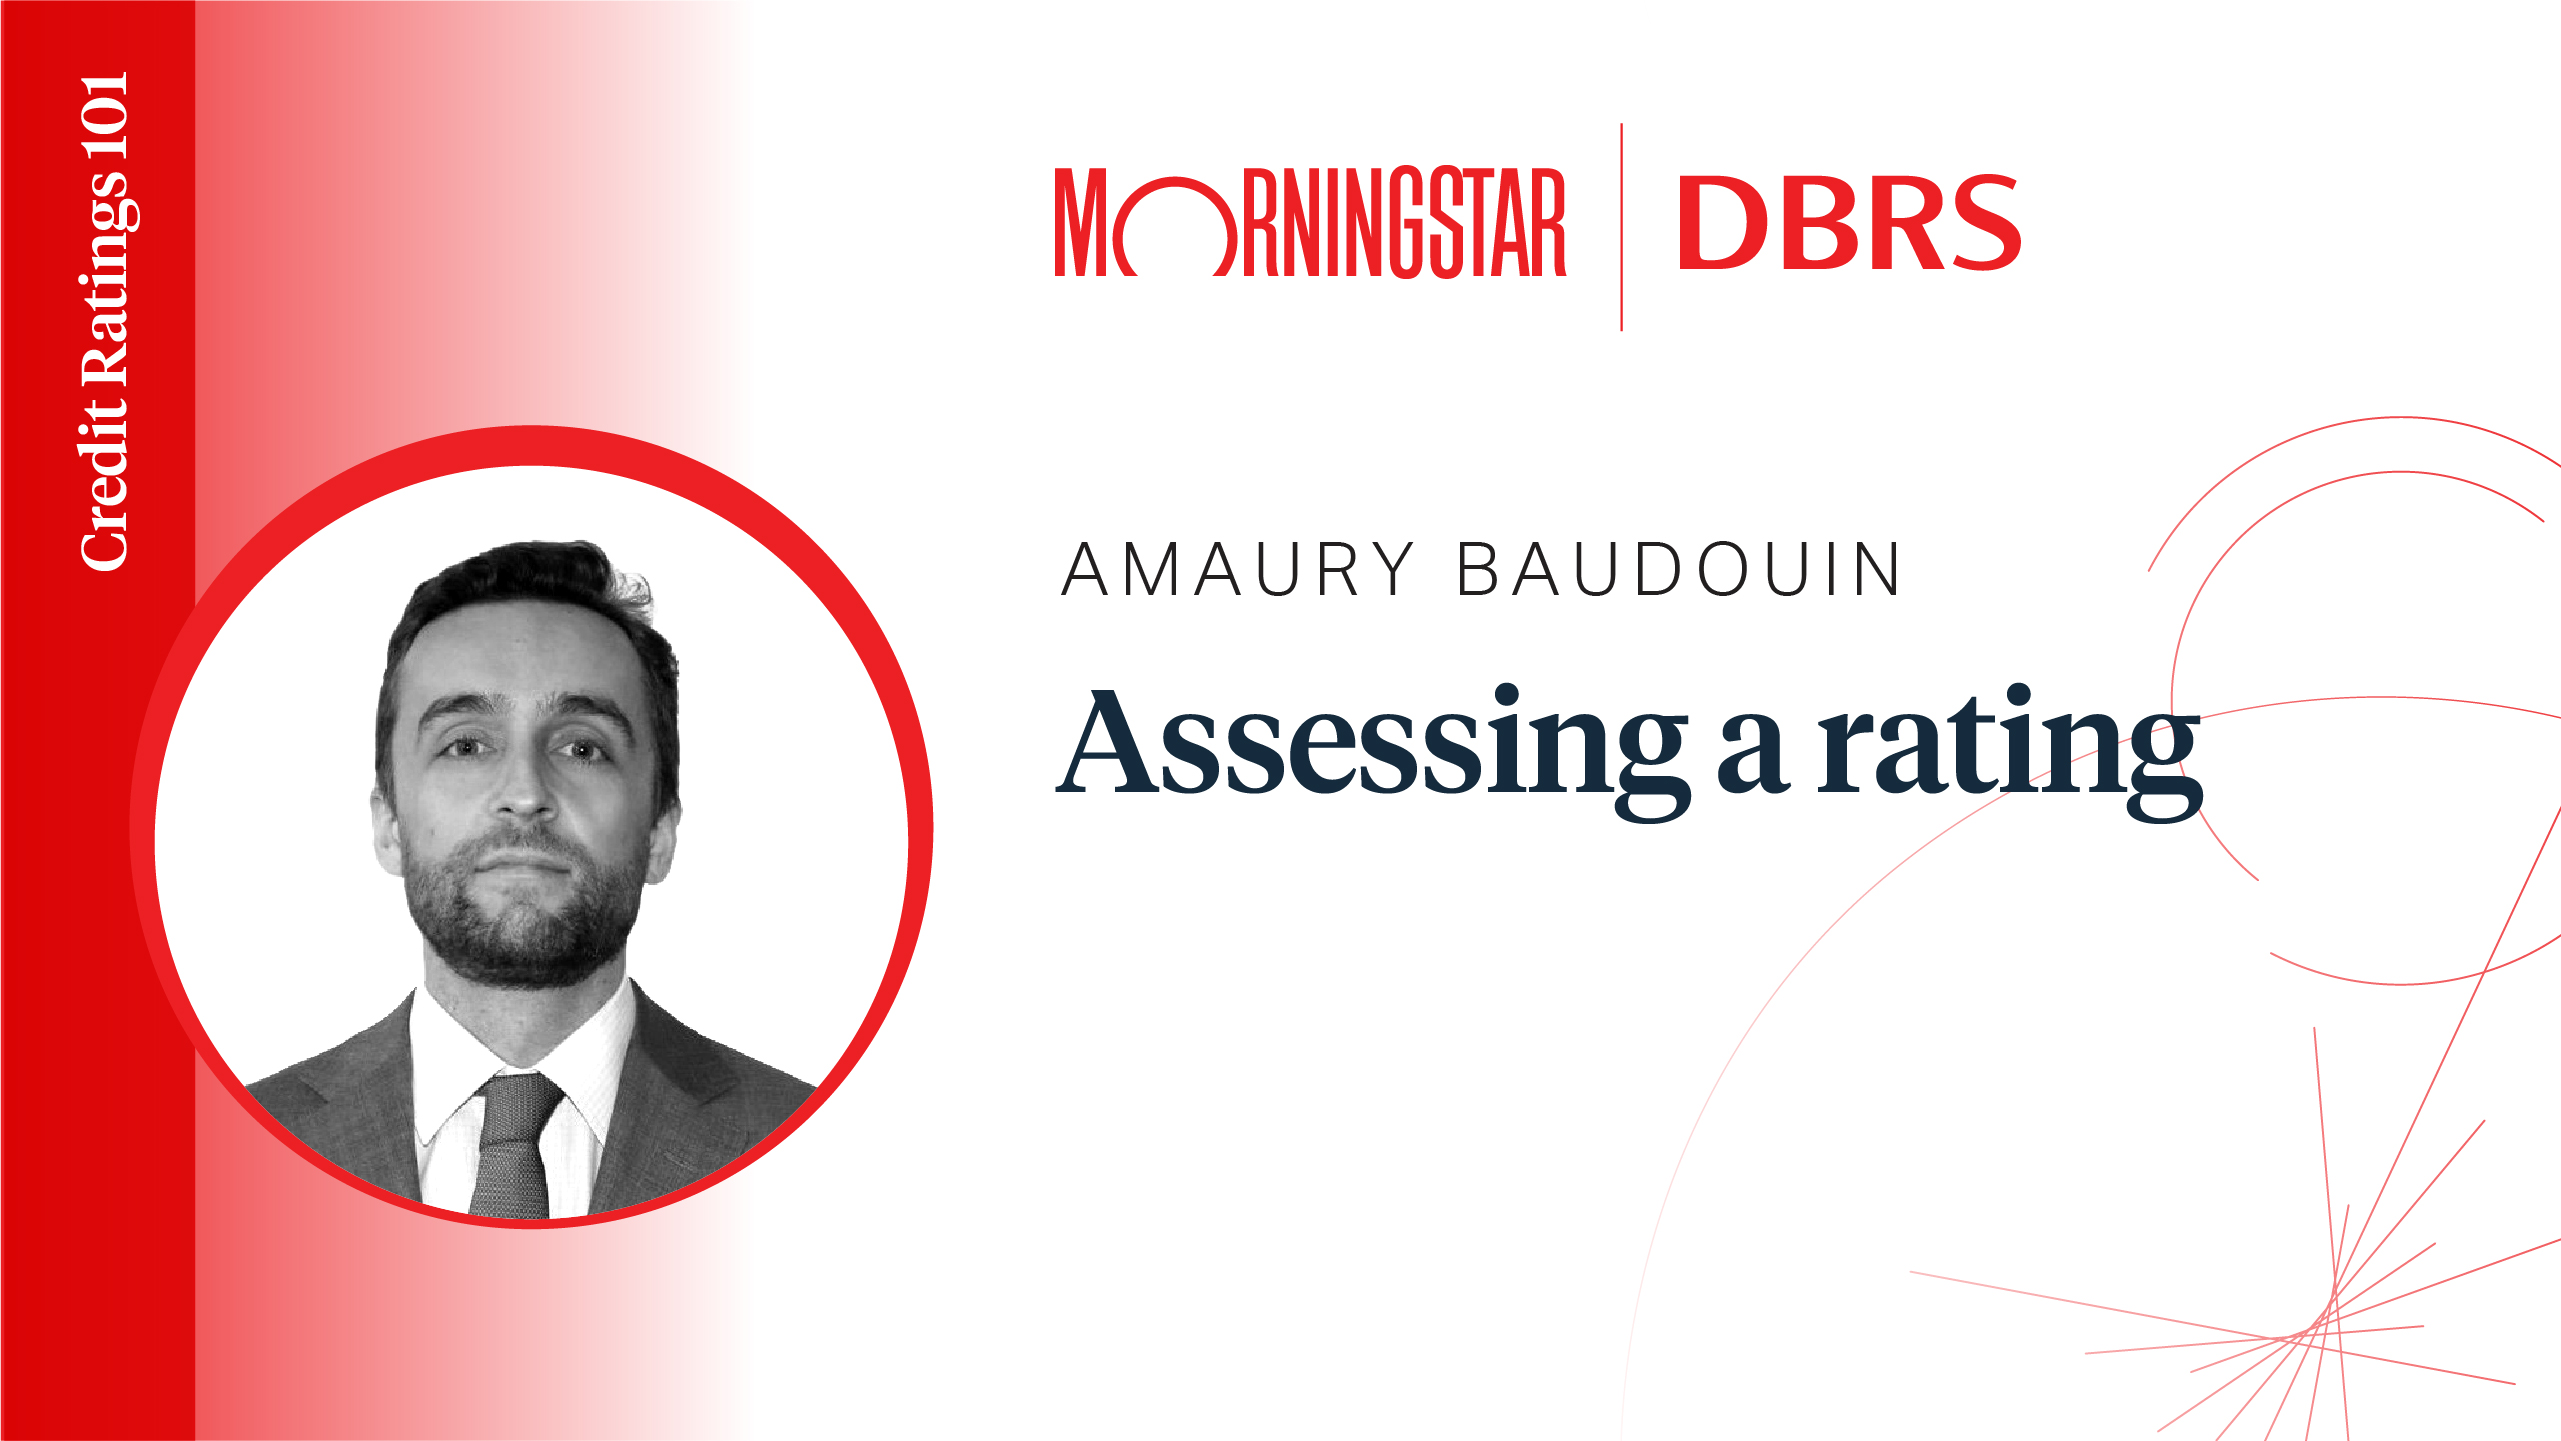 Credit Ratings 101: Amaury Baudouin - Assessing a Rating